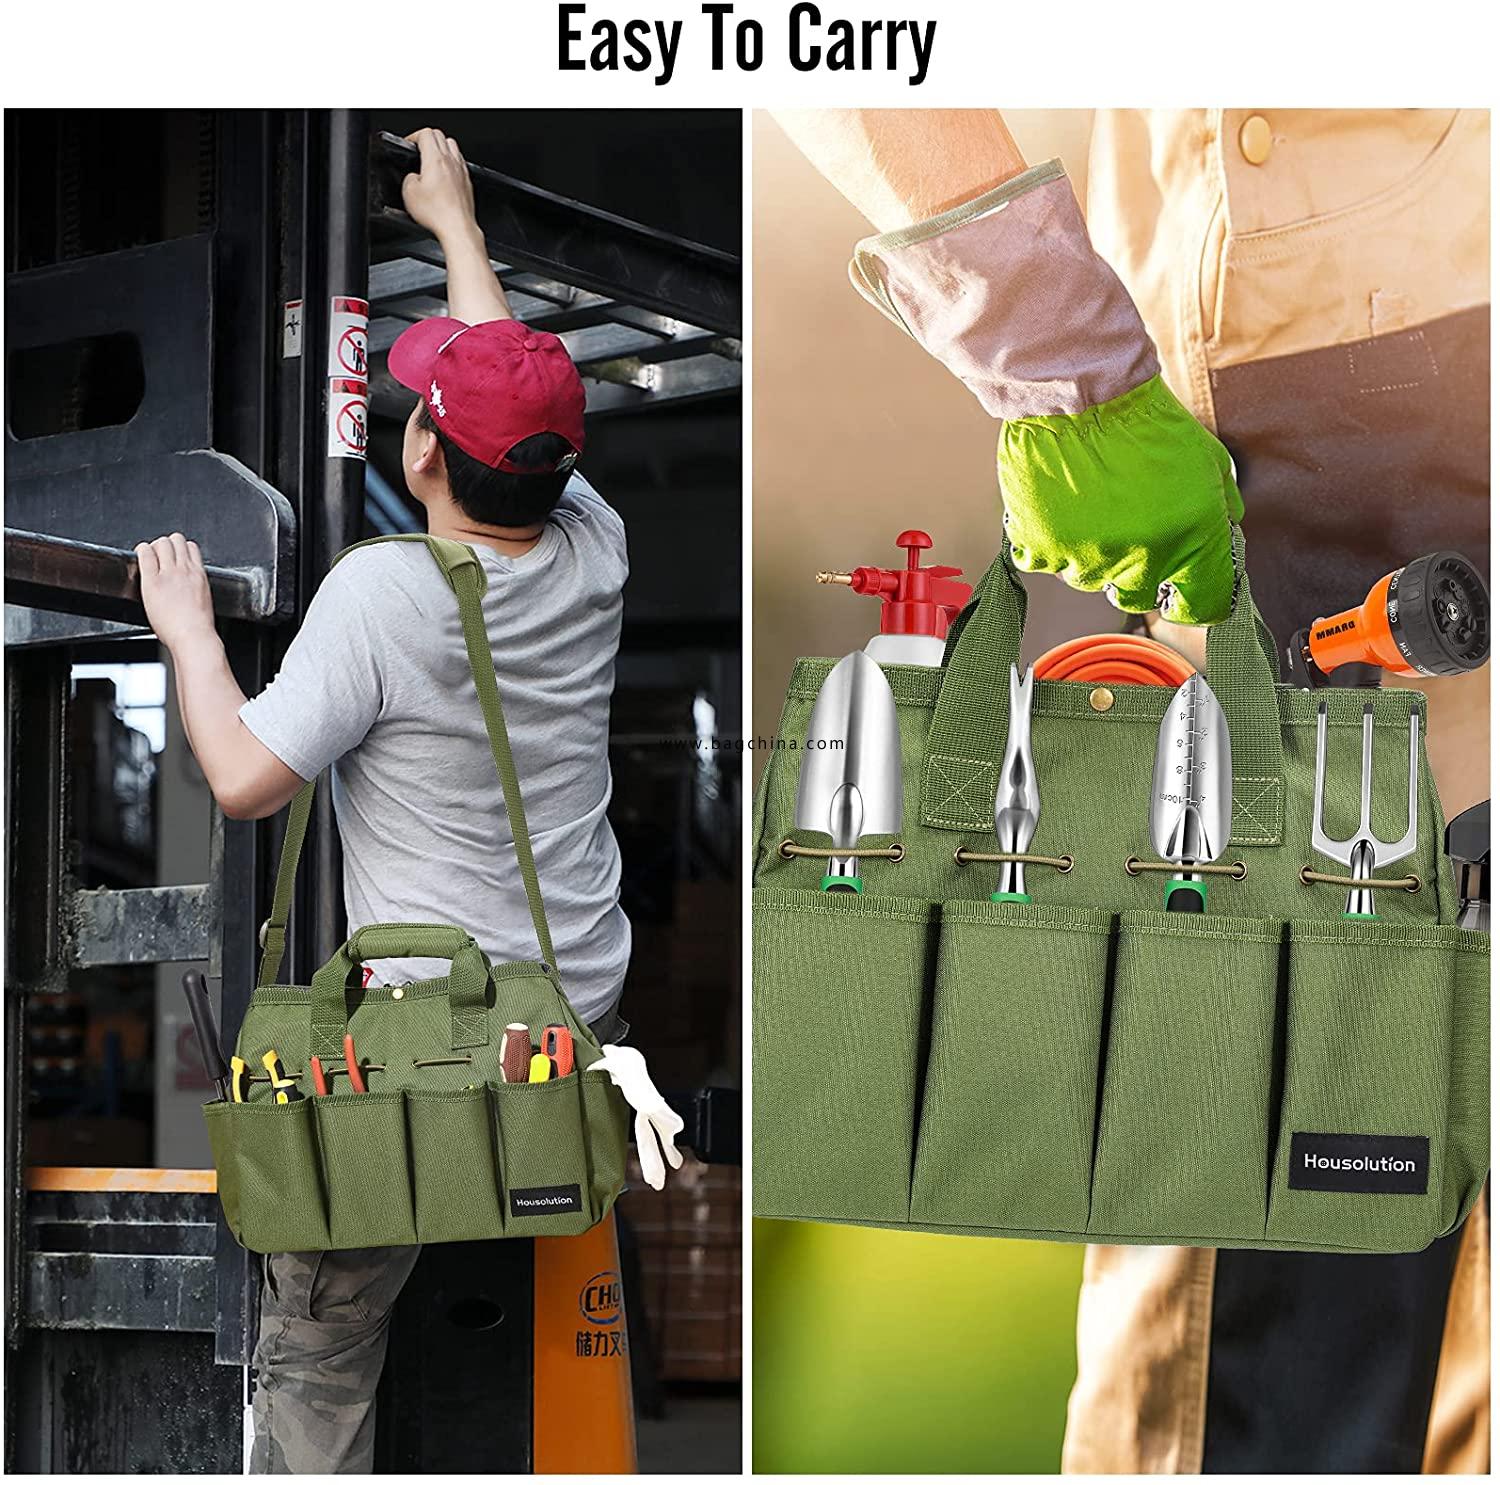 Garden Tool Organizer Carrier Bag